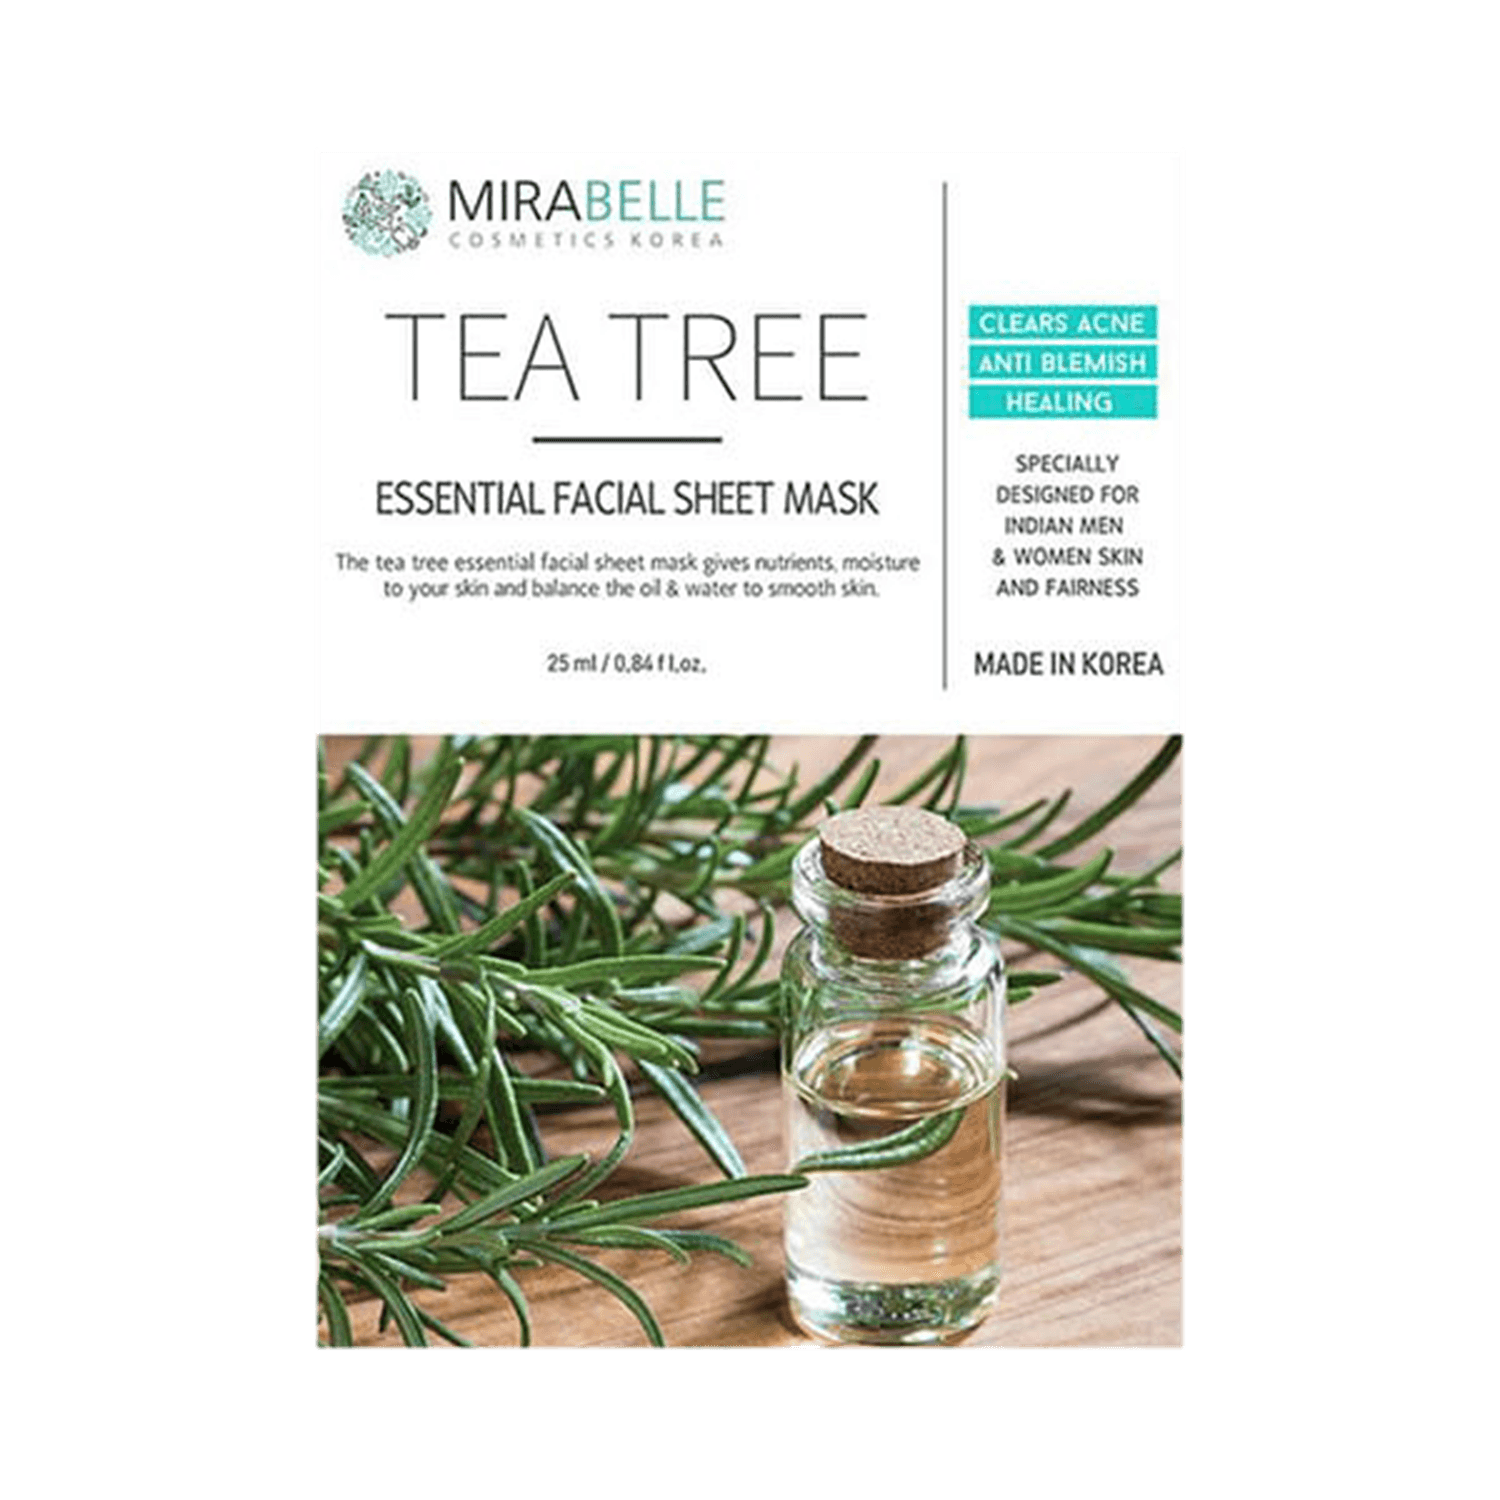 Mirabelle Cosmetics Korea | Mirabelle Cosmetics Korea Tea Tree Essential Facial Sheet Mask (25ml)